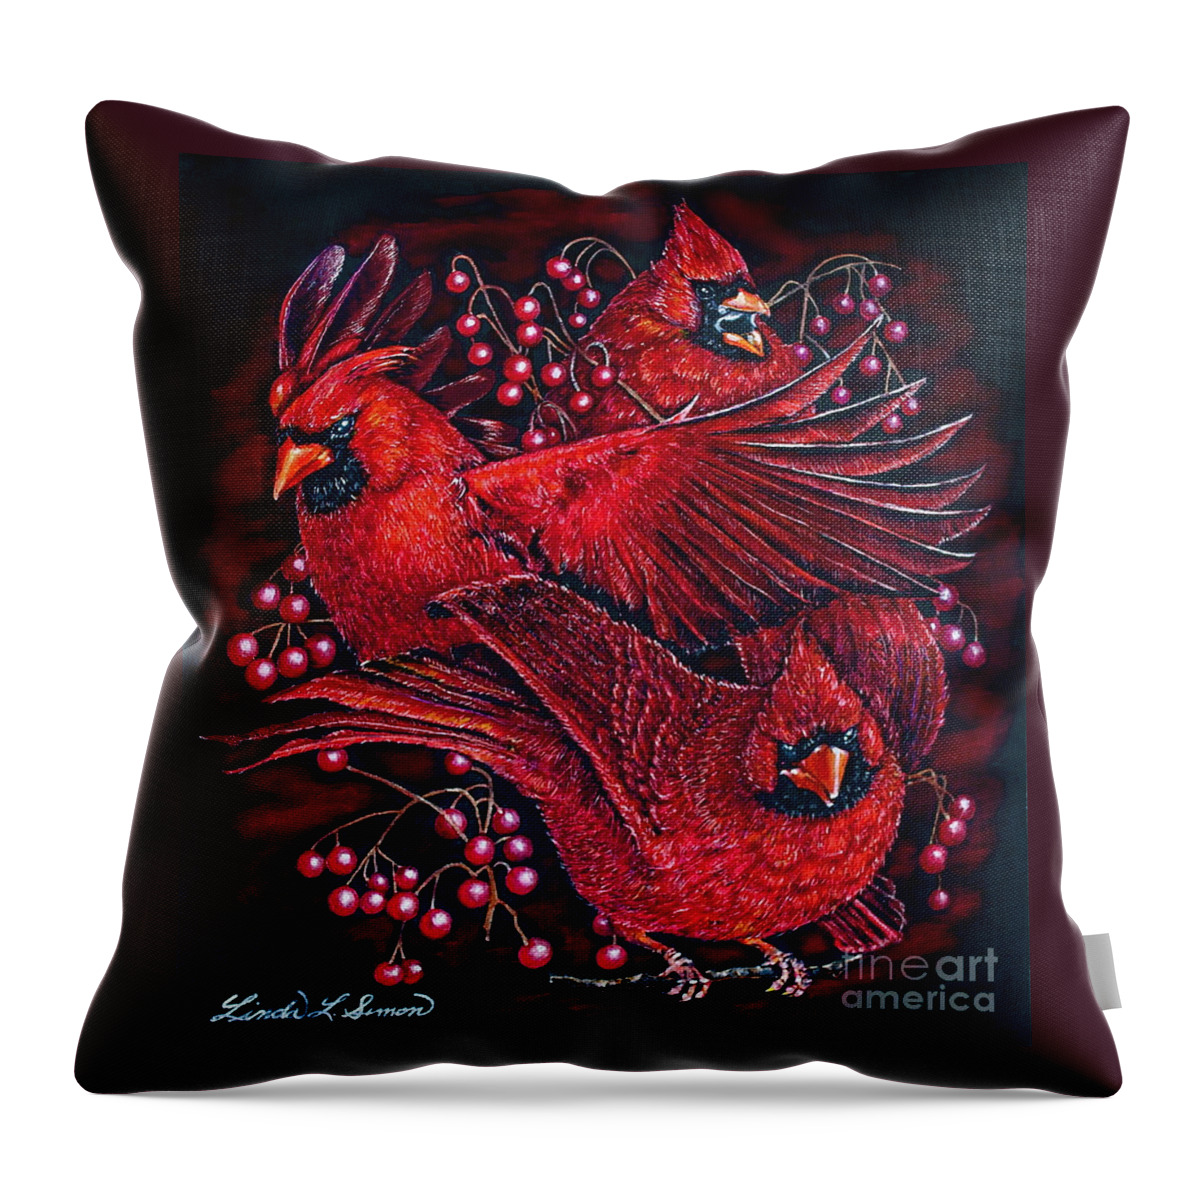  Linda Simon Throw Pillow featuring the painting Reds by Linda Simon